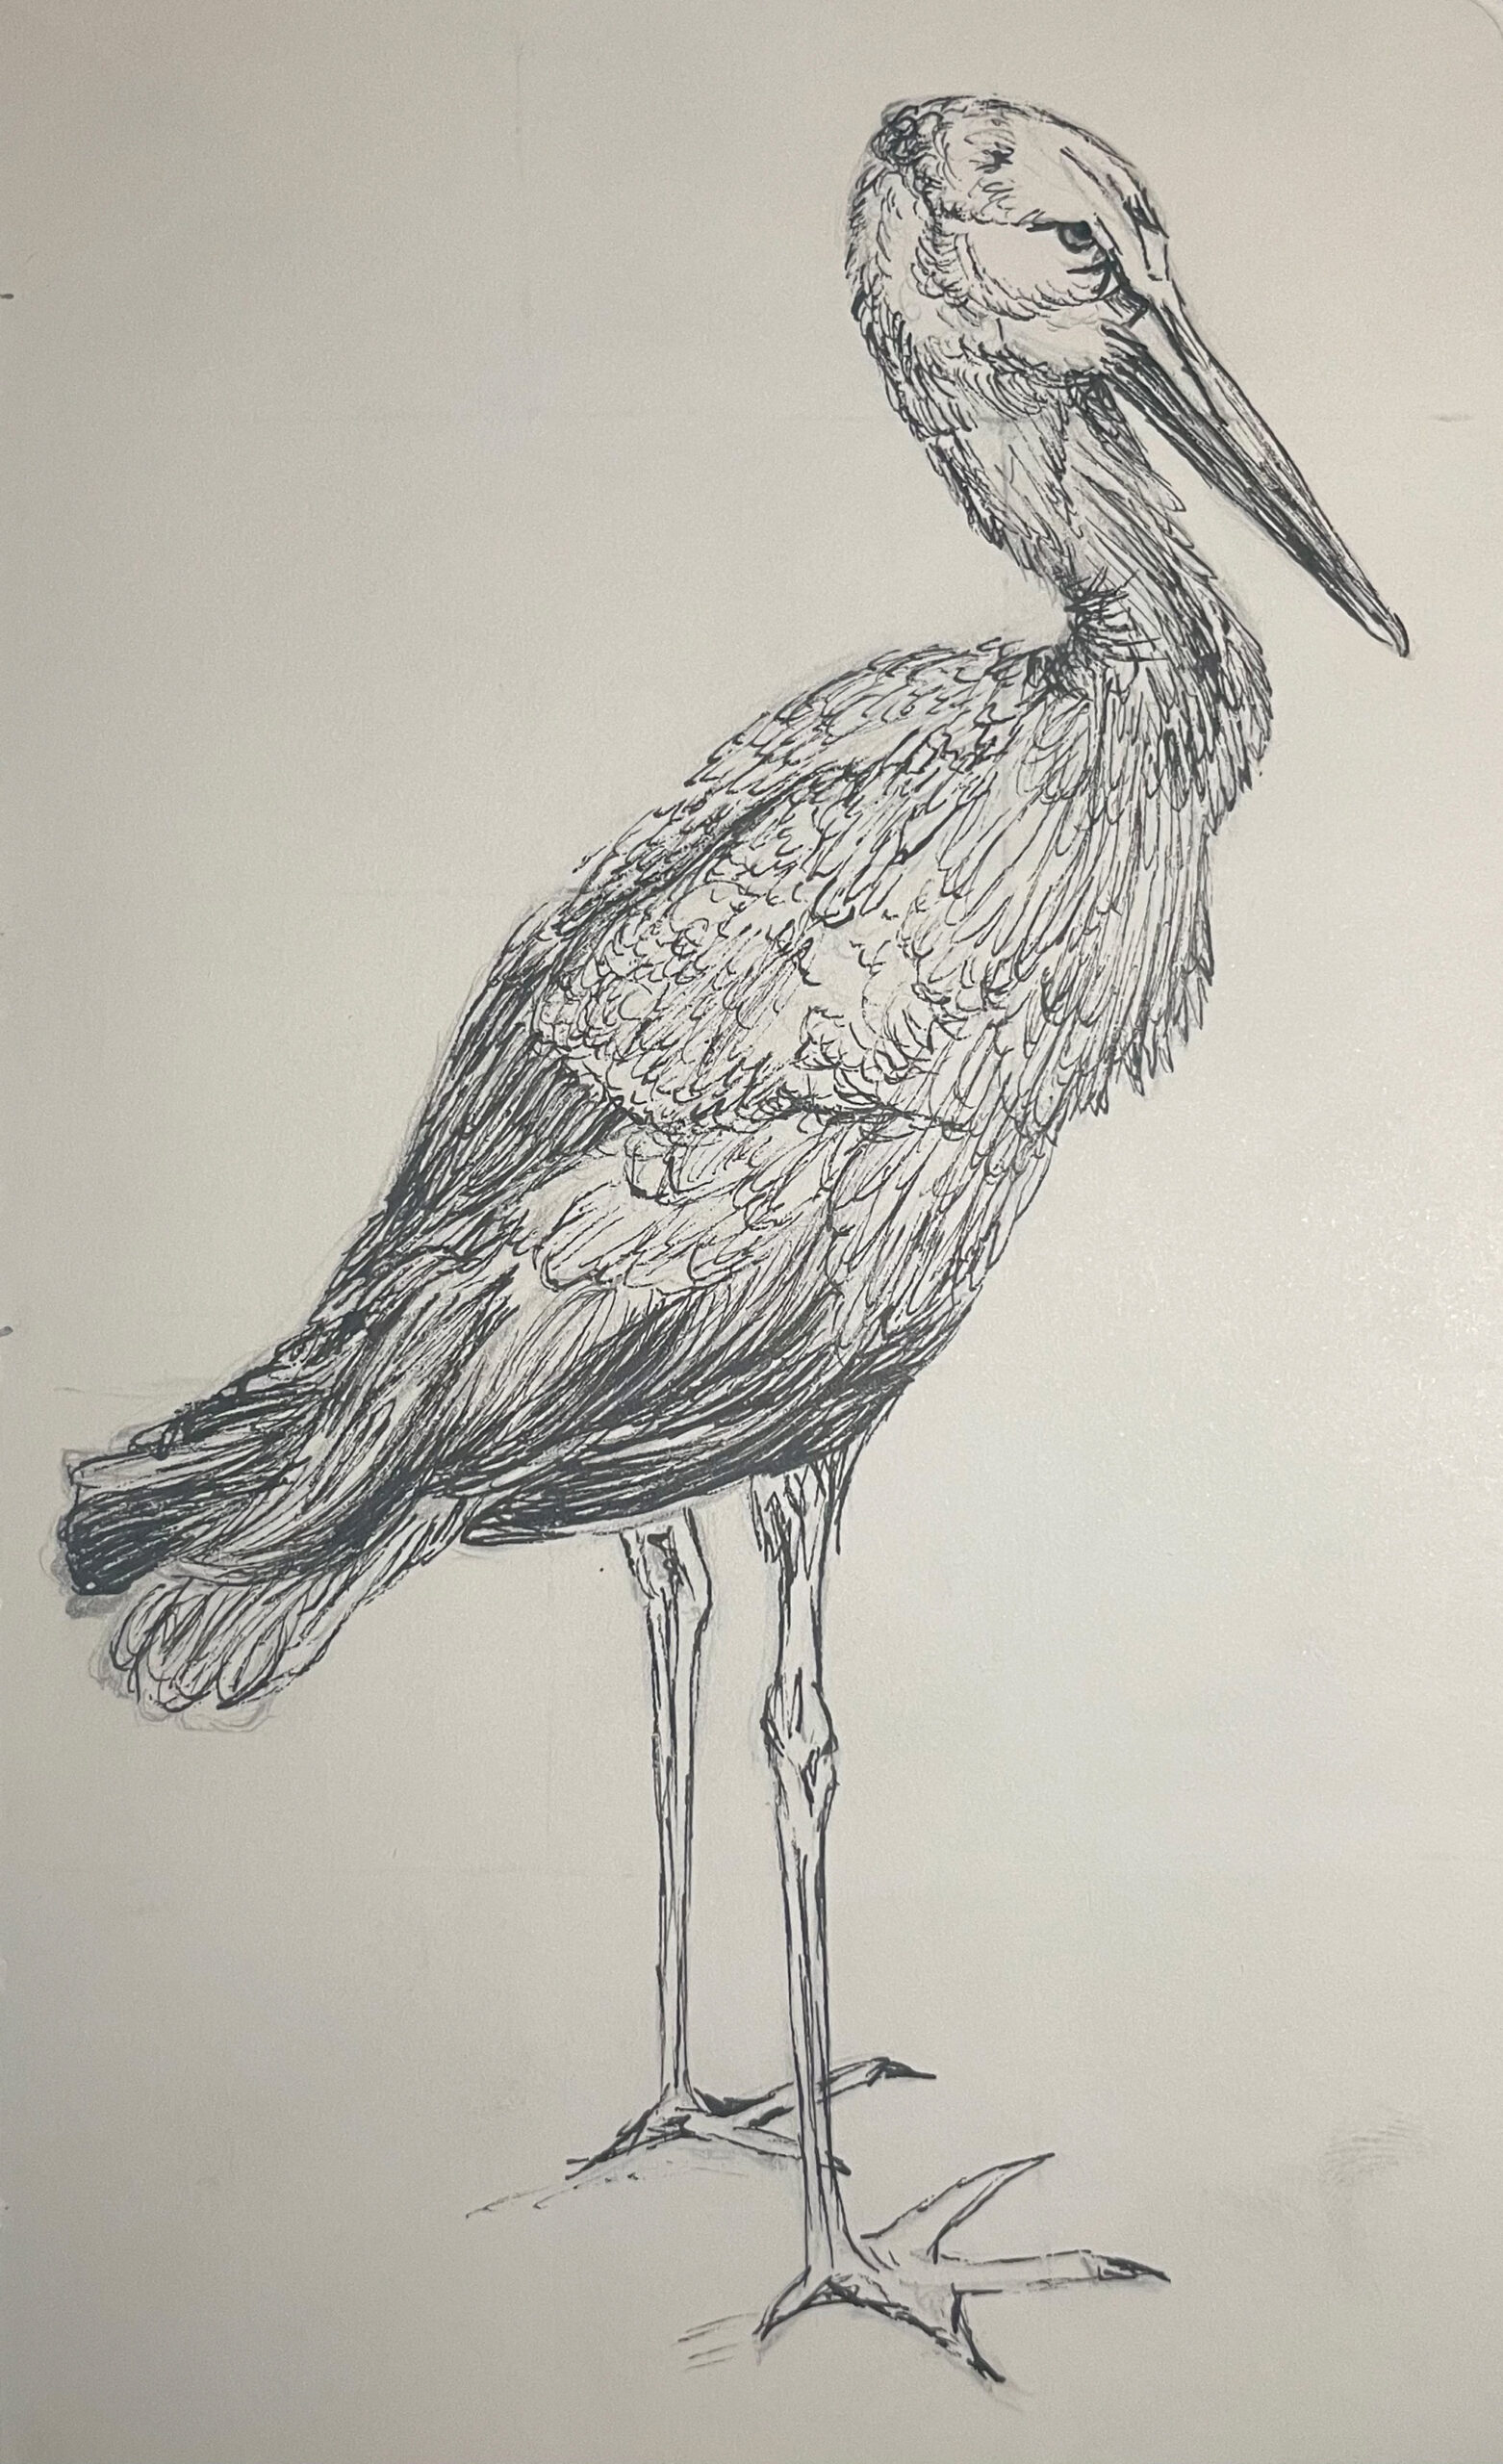 Sketch of a bird.